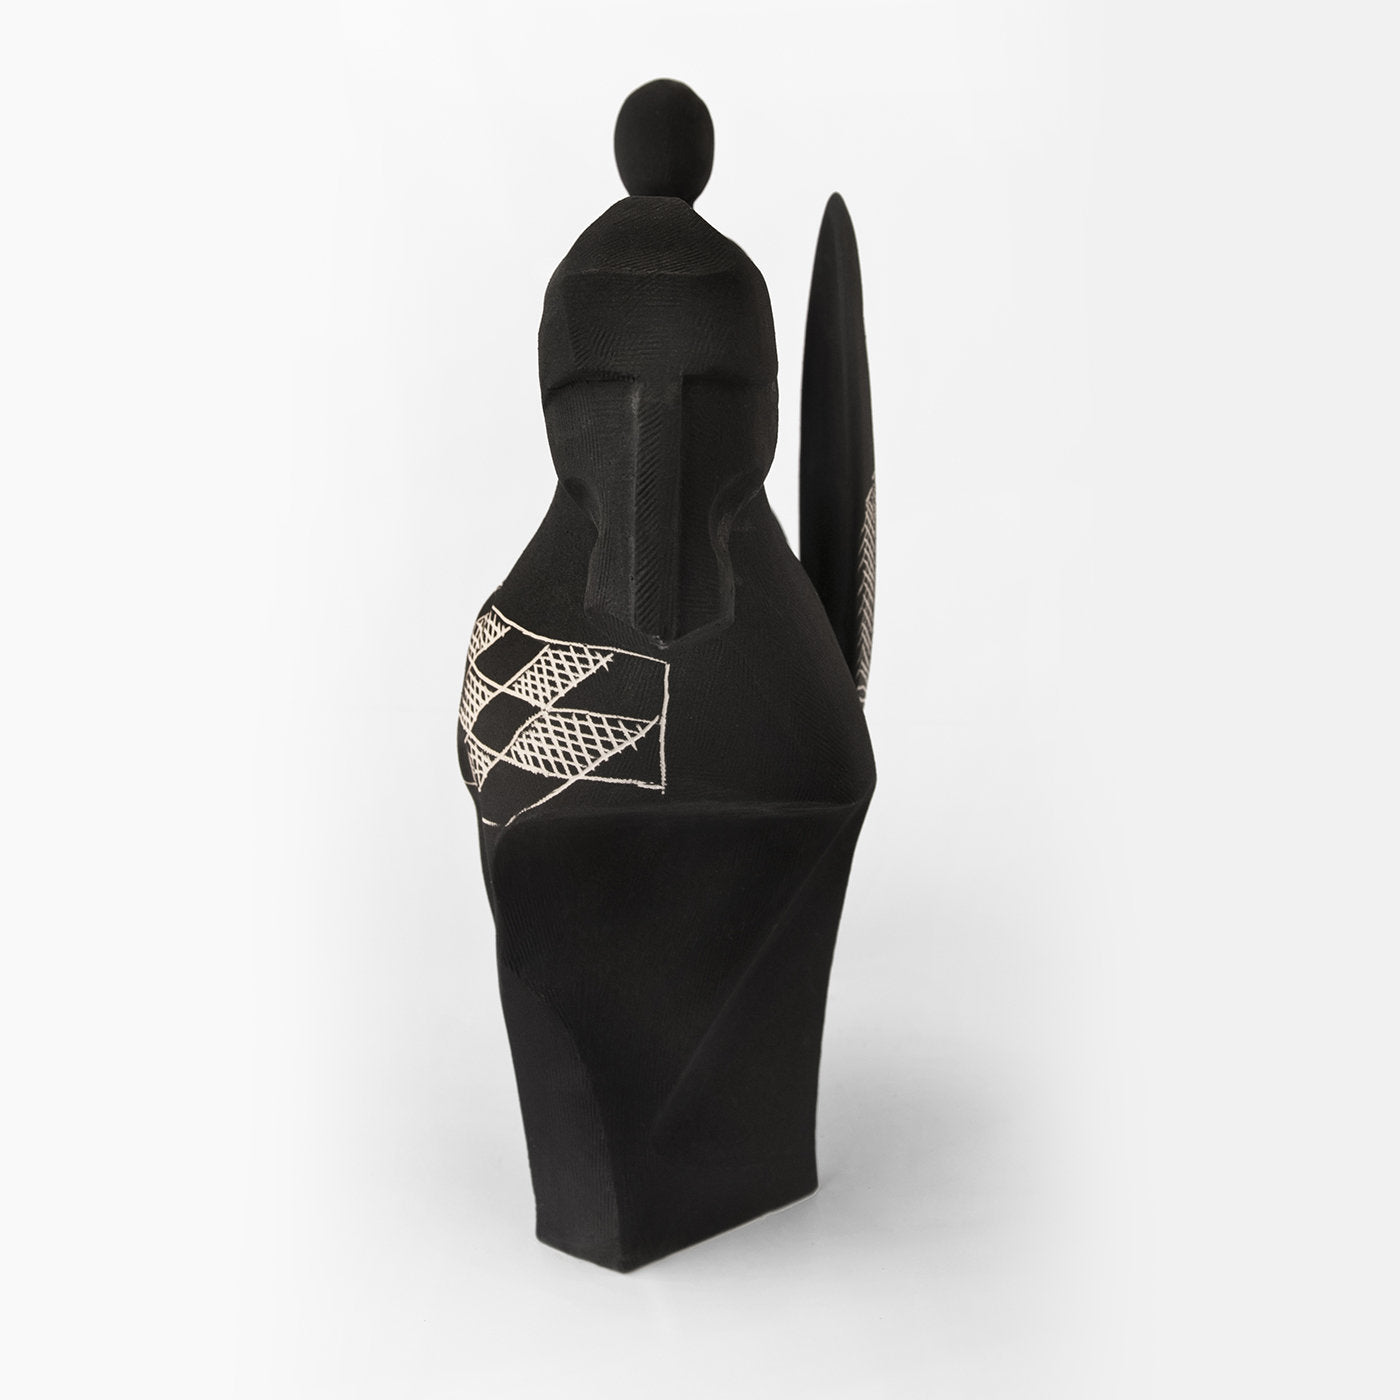 Guerriero Black Sculpture - Alternative view 3